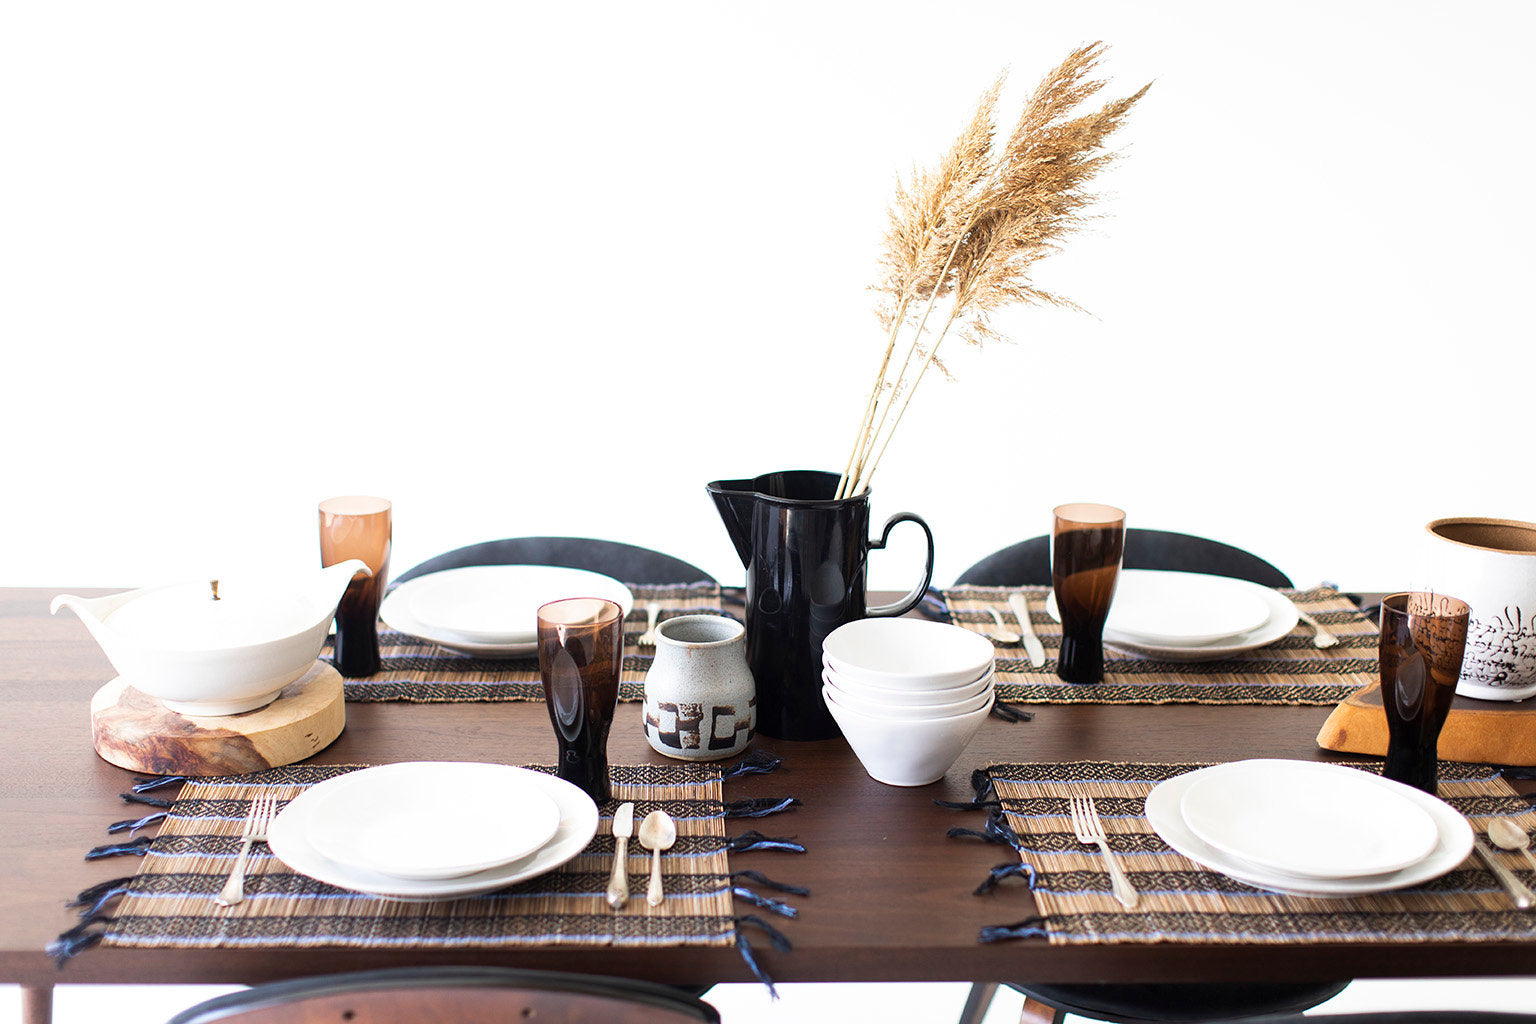 Modern Walnut Dining Table - 0418 - 